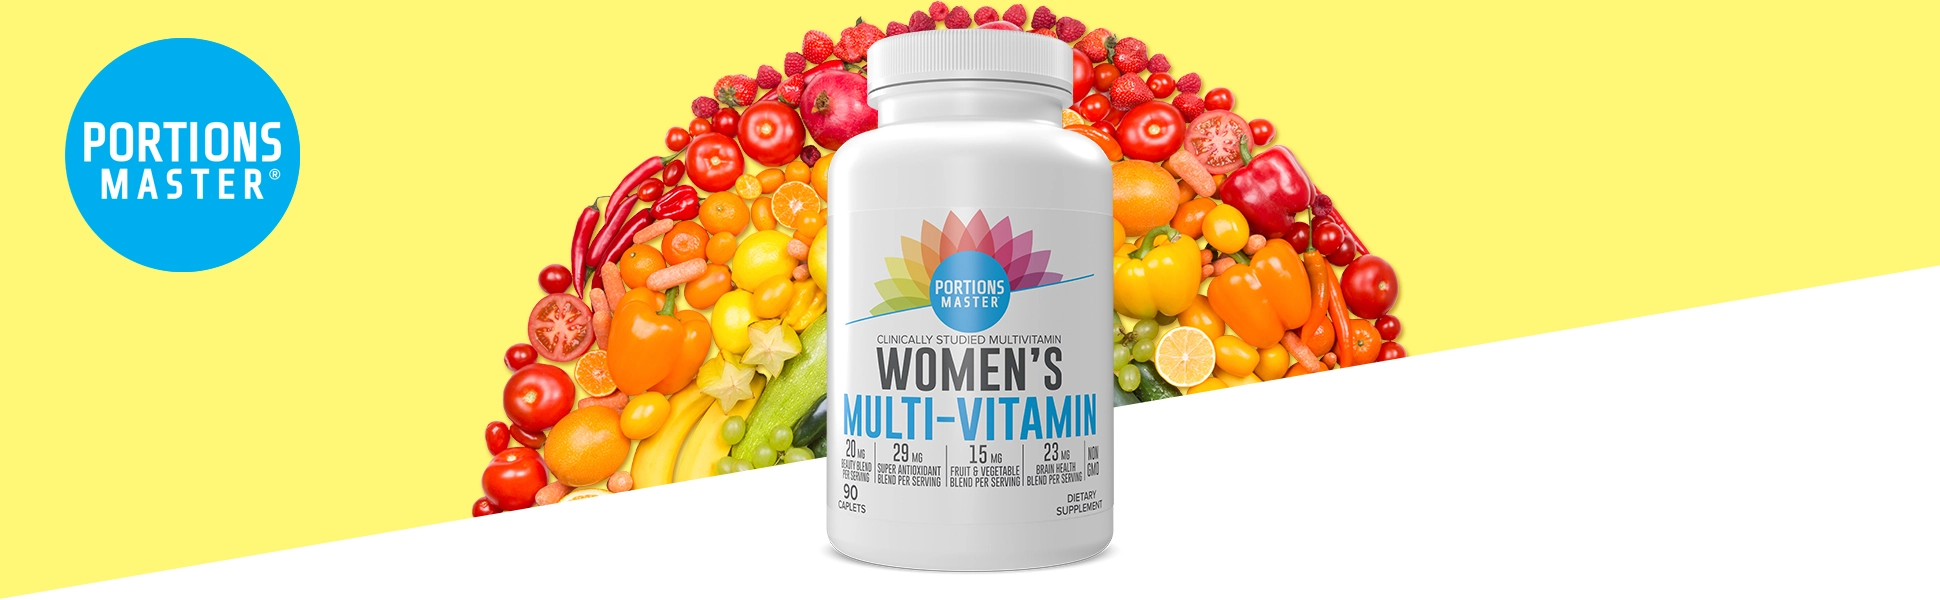 Multi-Vitamin Banner